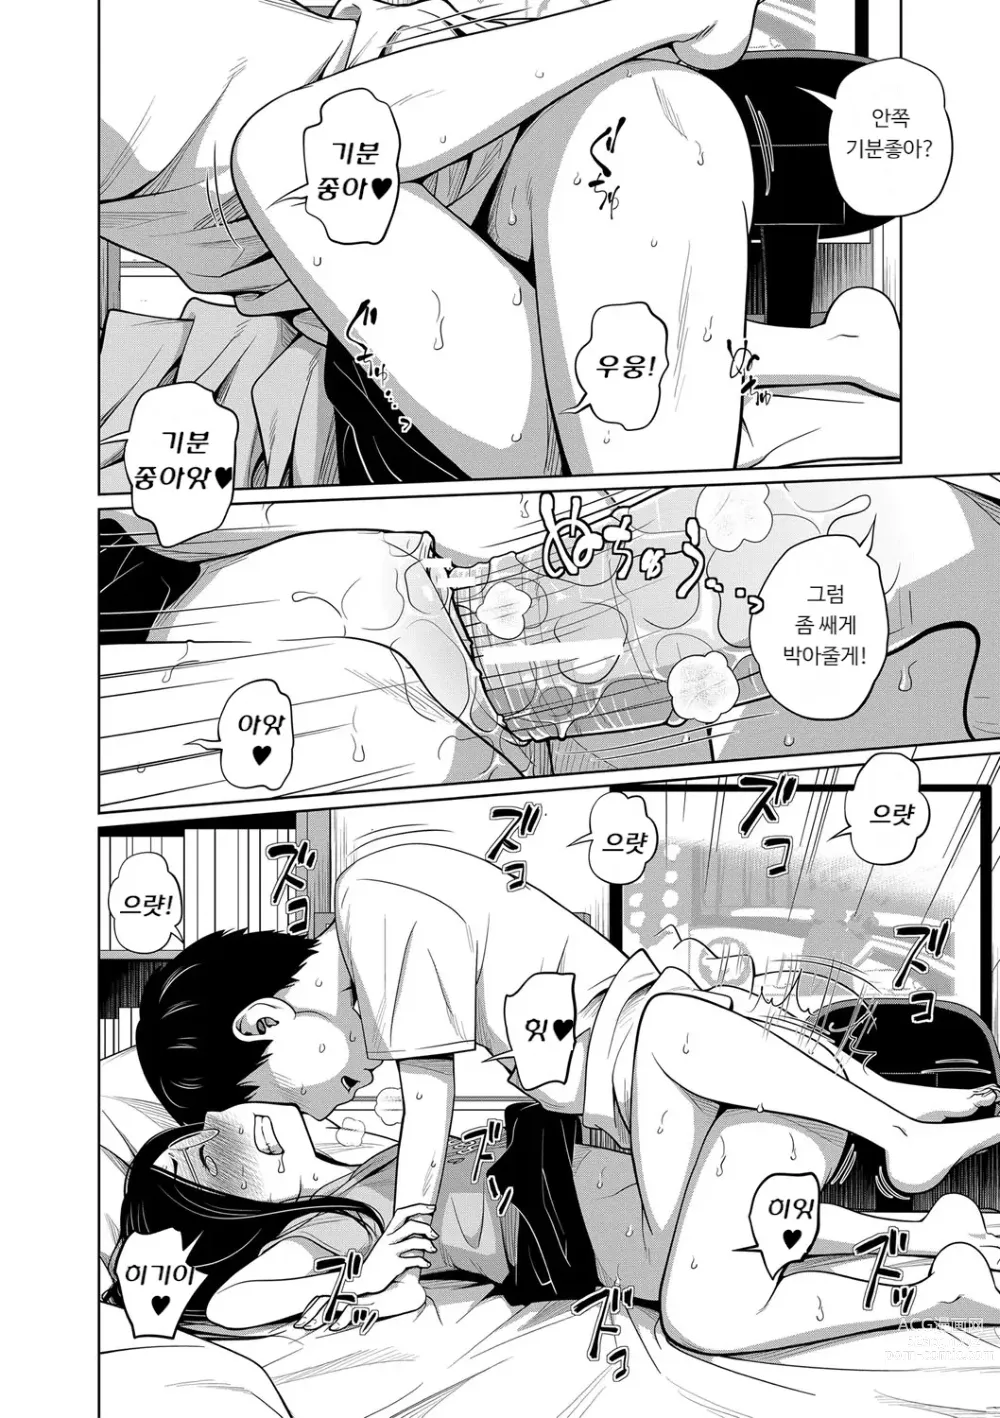 Page 23 of manga Imouto Access - Sister Access